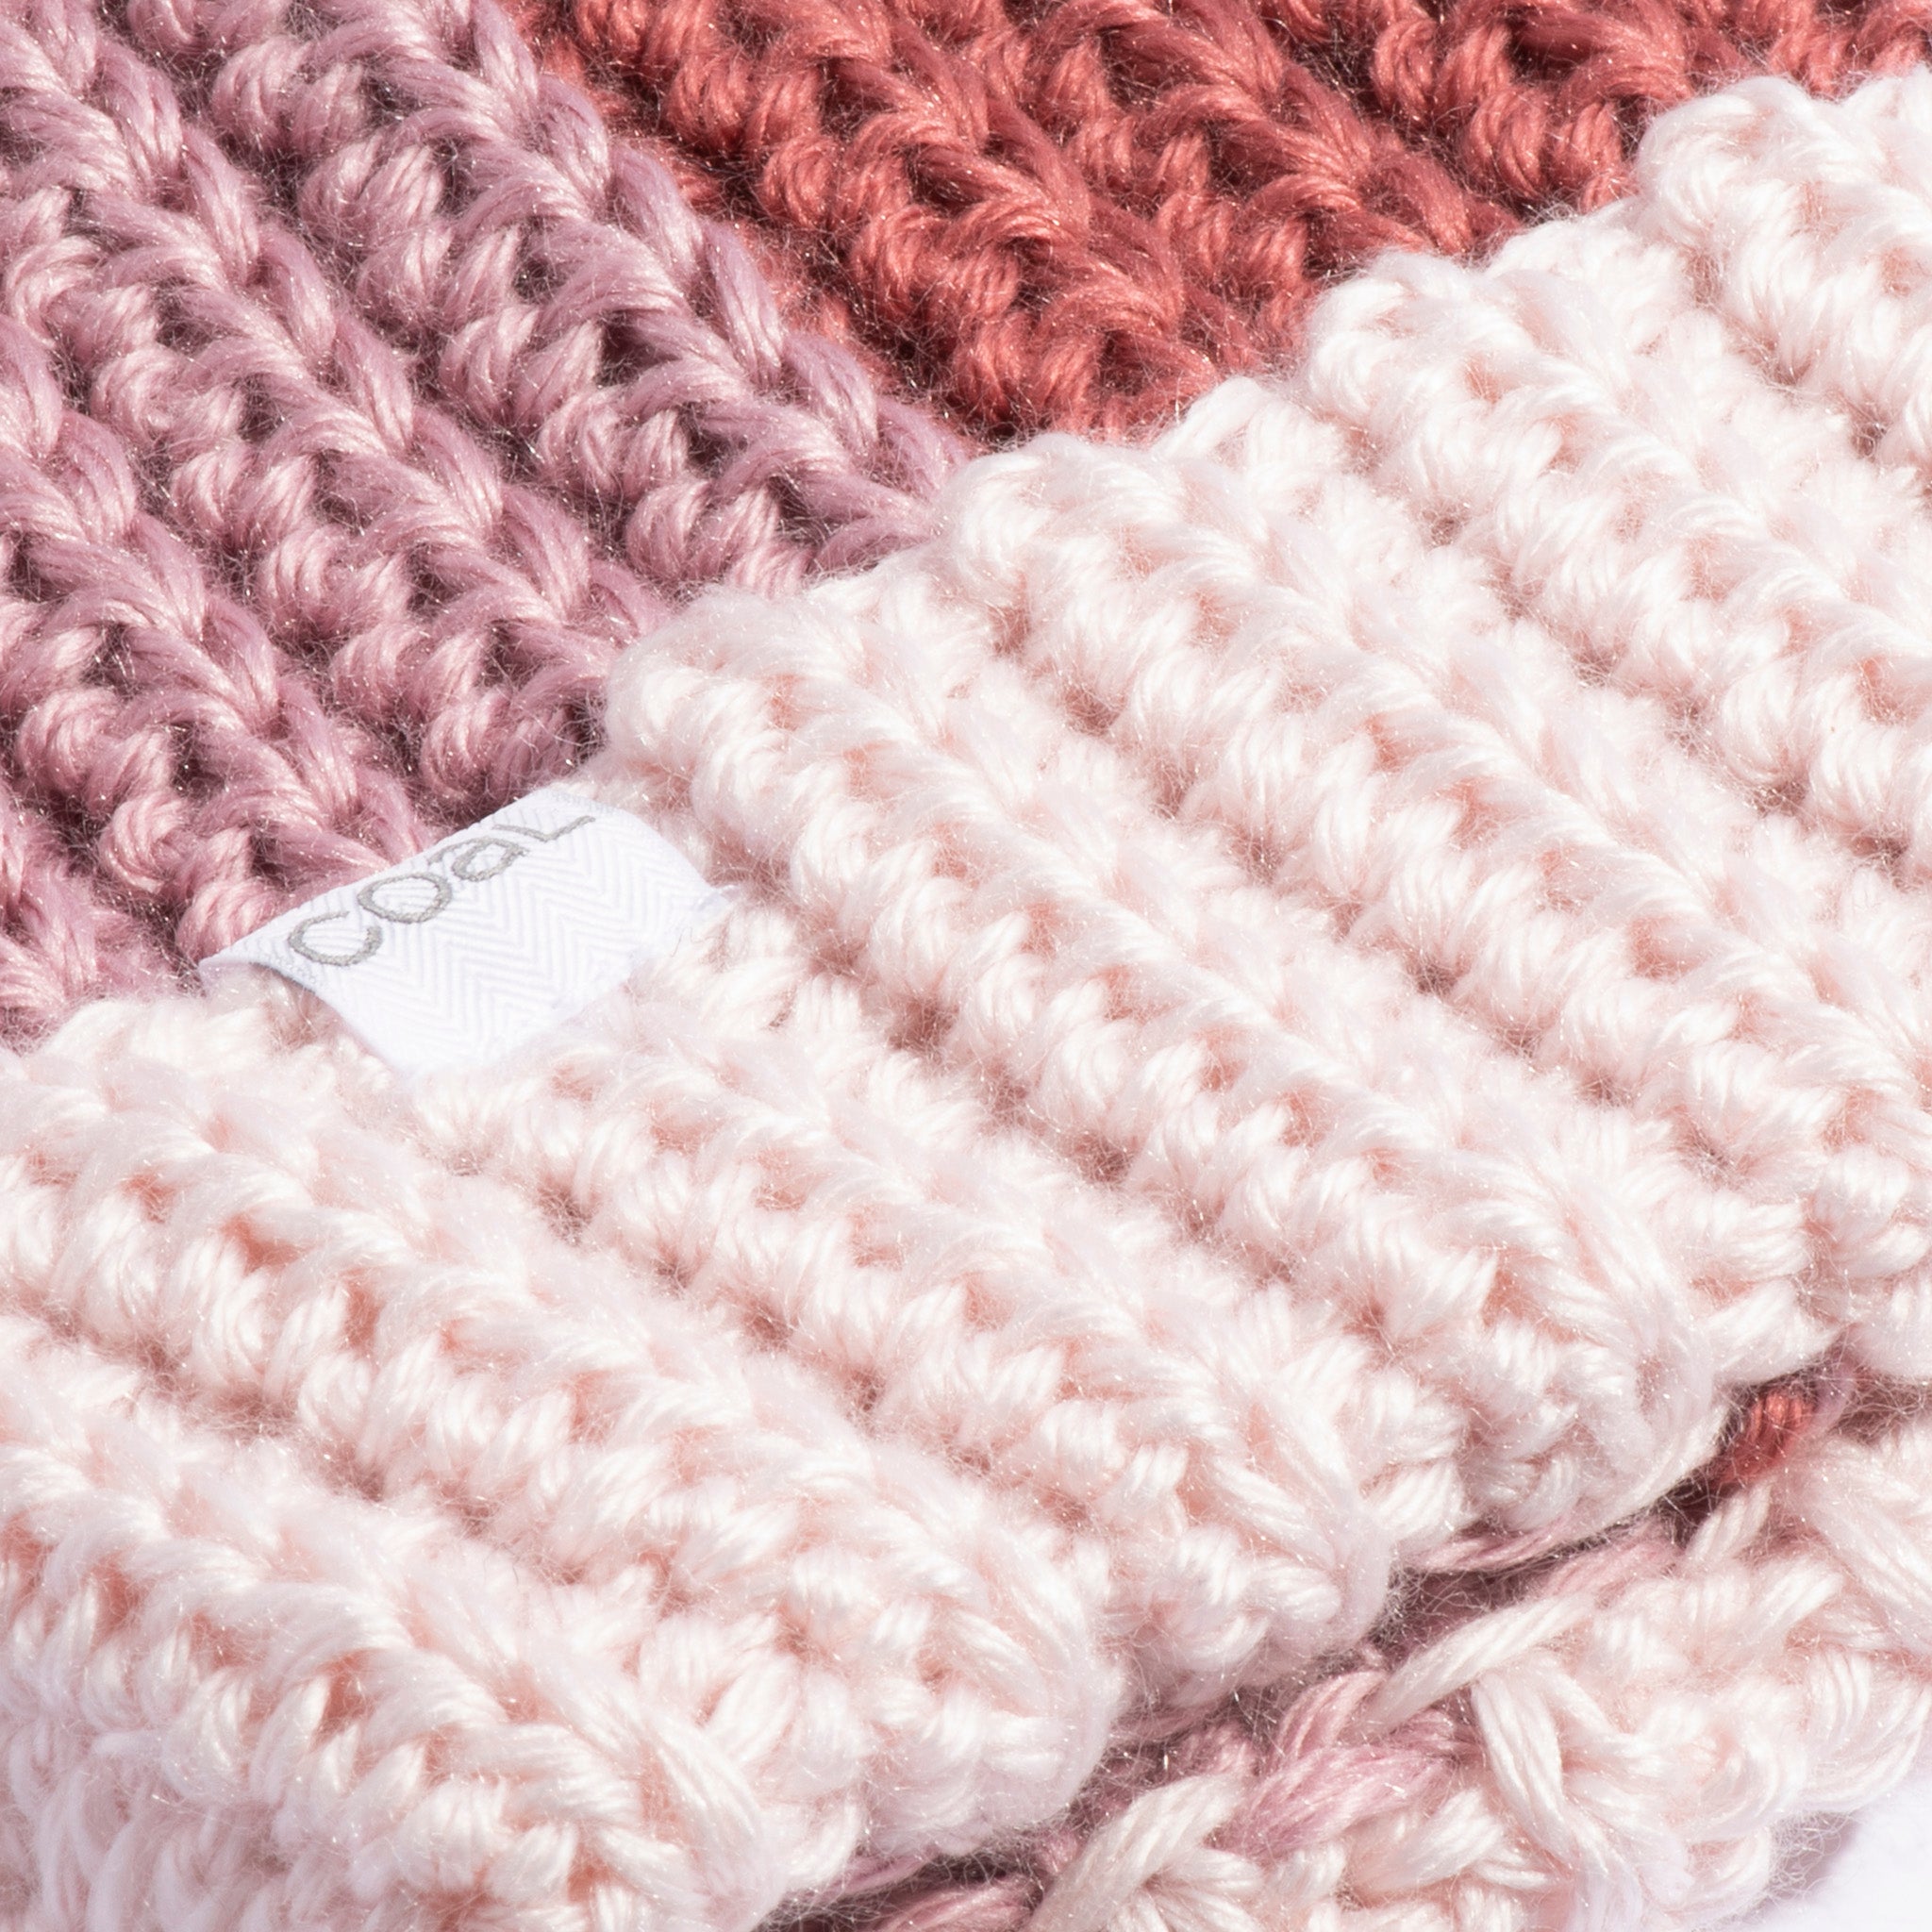 The Naima Headwear – Crochet Coal Beanie